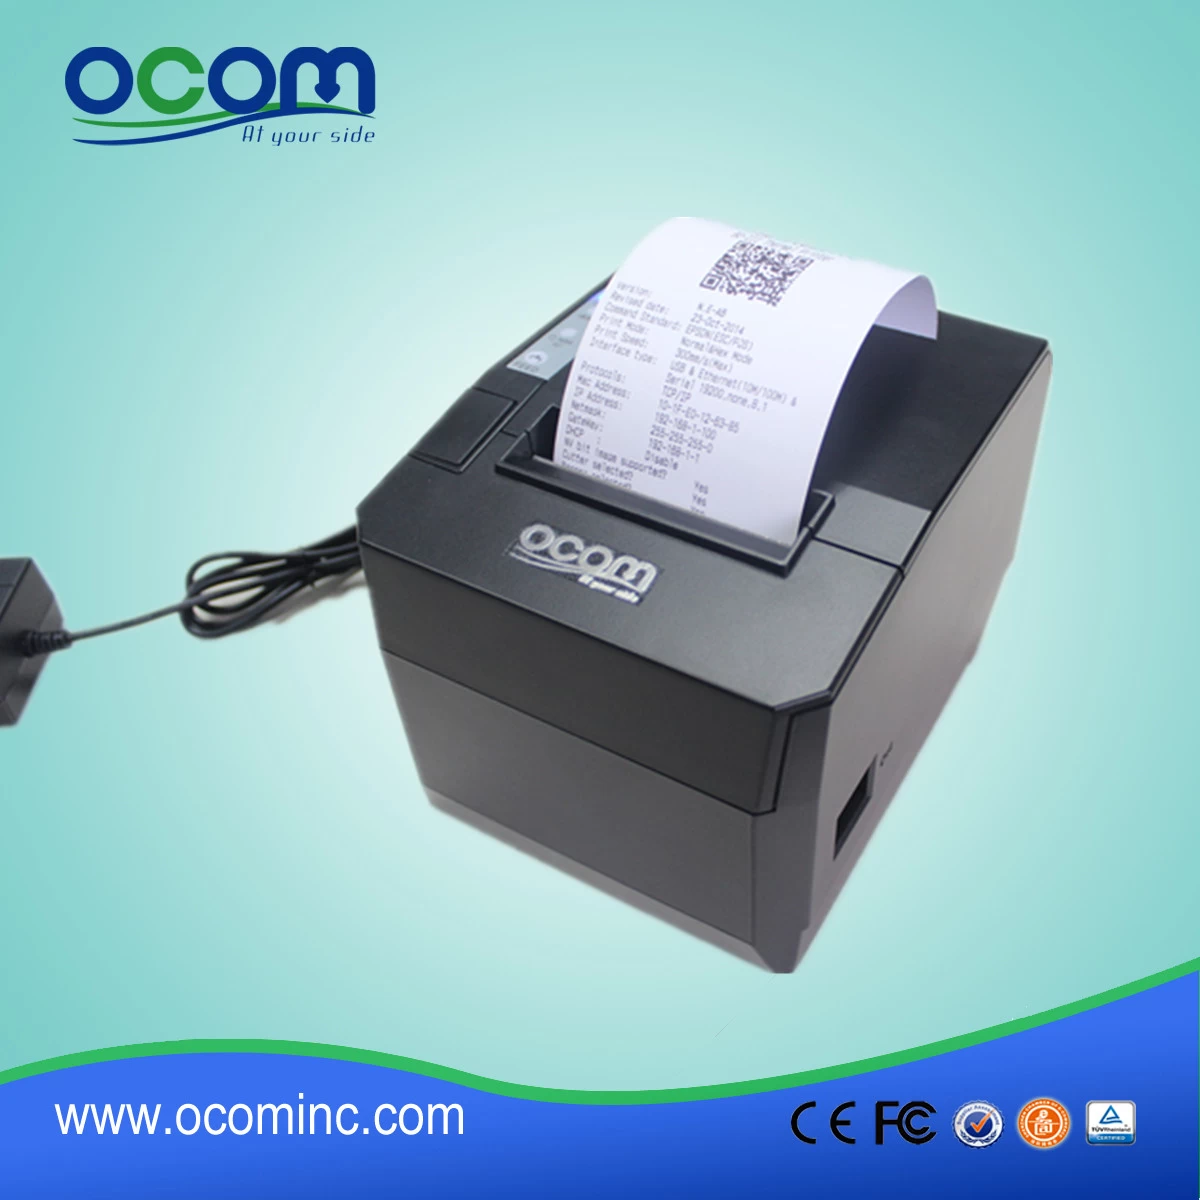 Re:China factory 80mm desktop WIFI POS thermal receipt printer-OCPP-88A-W